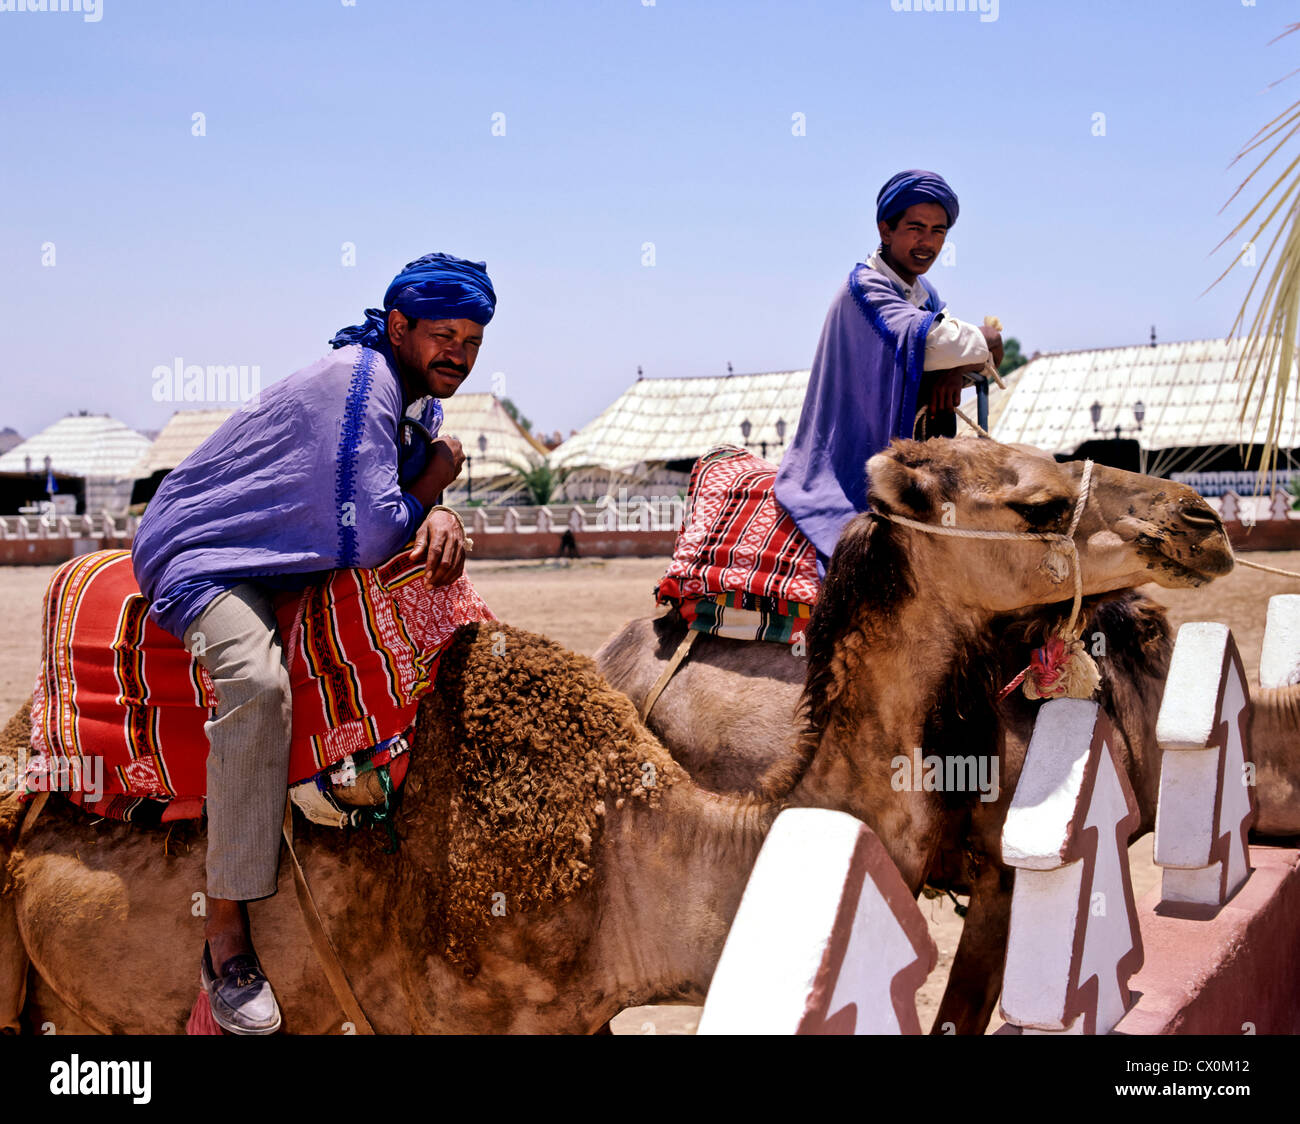 8179. Los jinetes de camellos en la fantasia, Marrakech, Marruecos Foto de stock